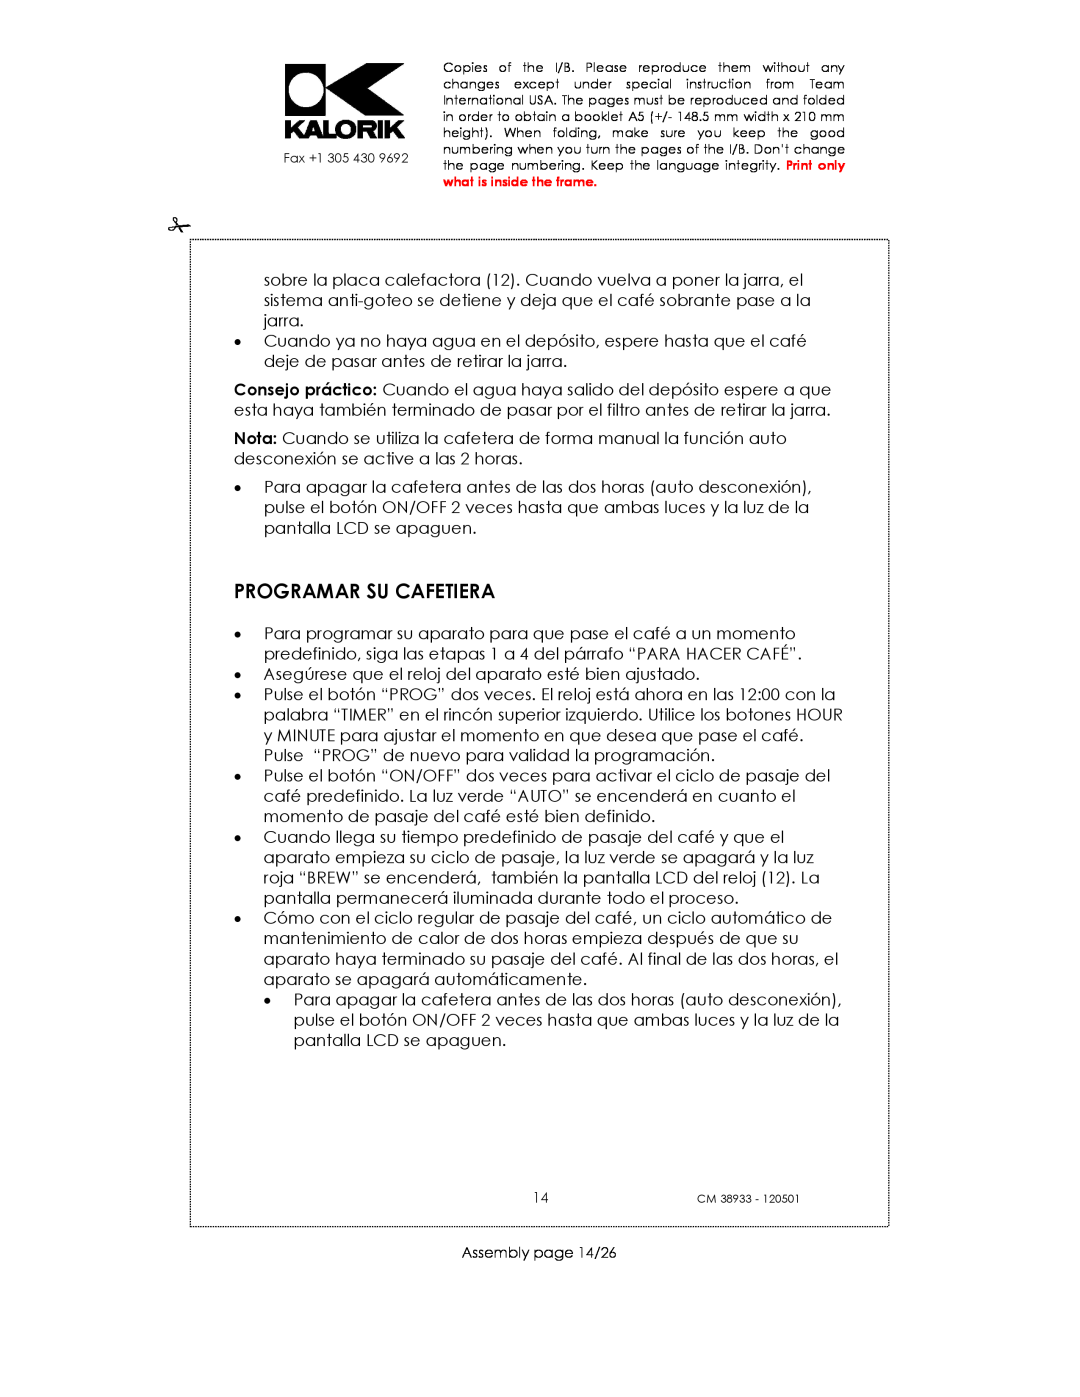 Kalorik CM 38933 manual Programar Su Cafetiera, Assembly page 14/26 